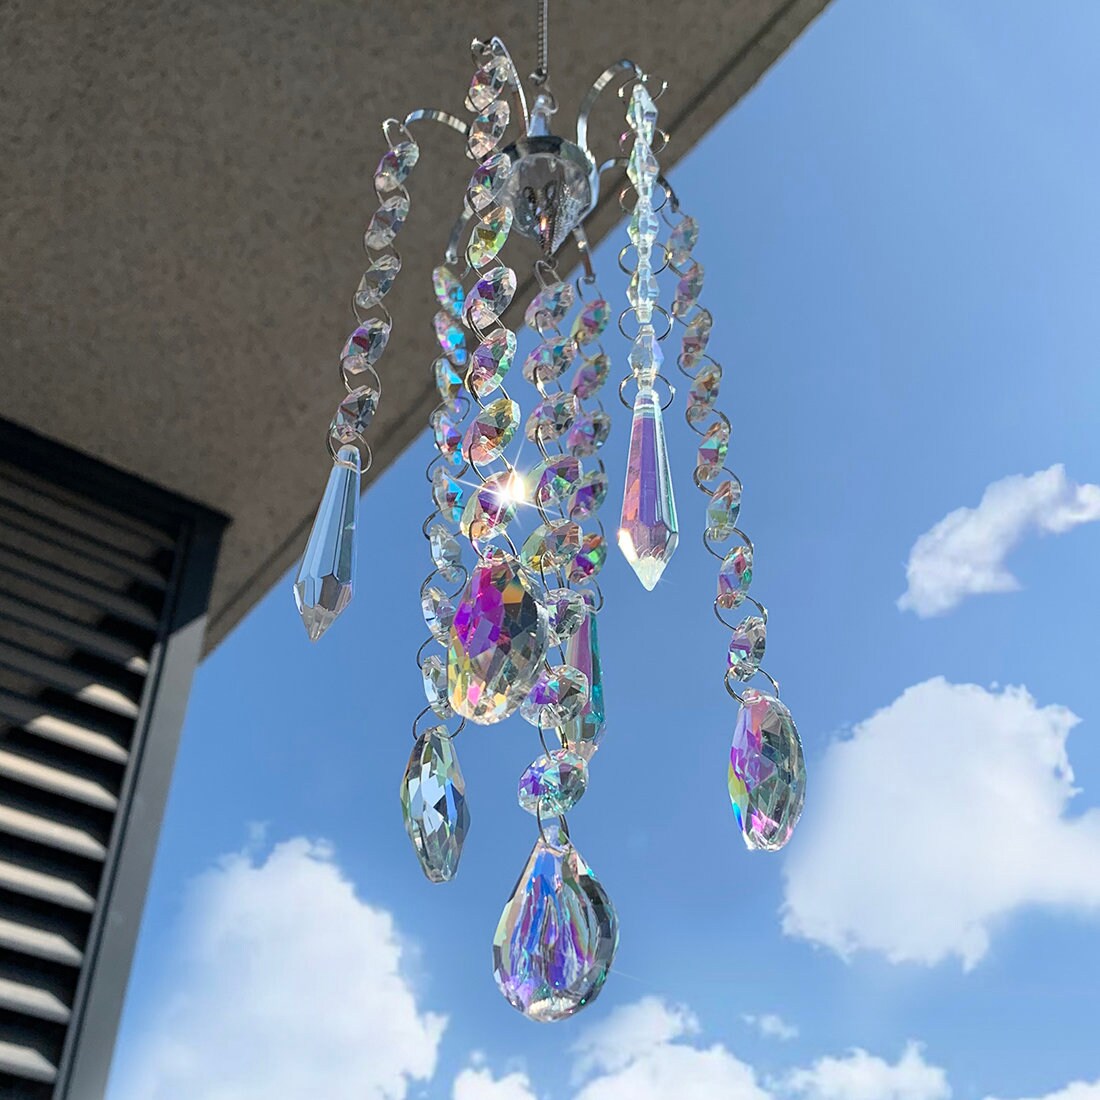 7PCS Hanging Crystal Prism Pendant Rainbow Suncatcher Window Chandelier  Decor US